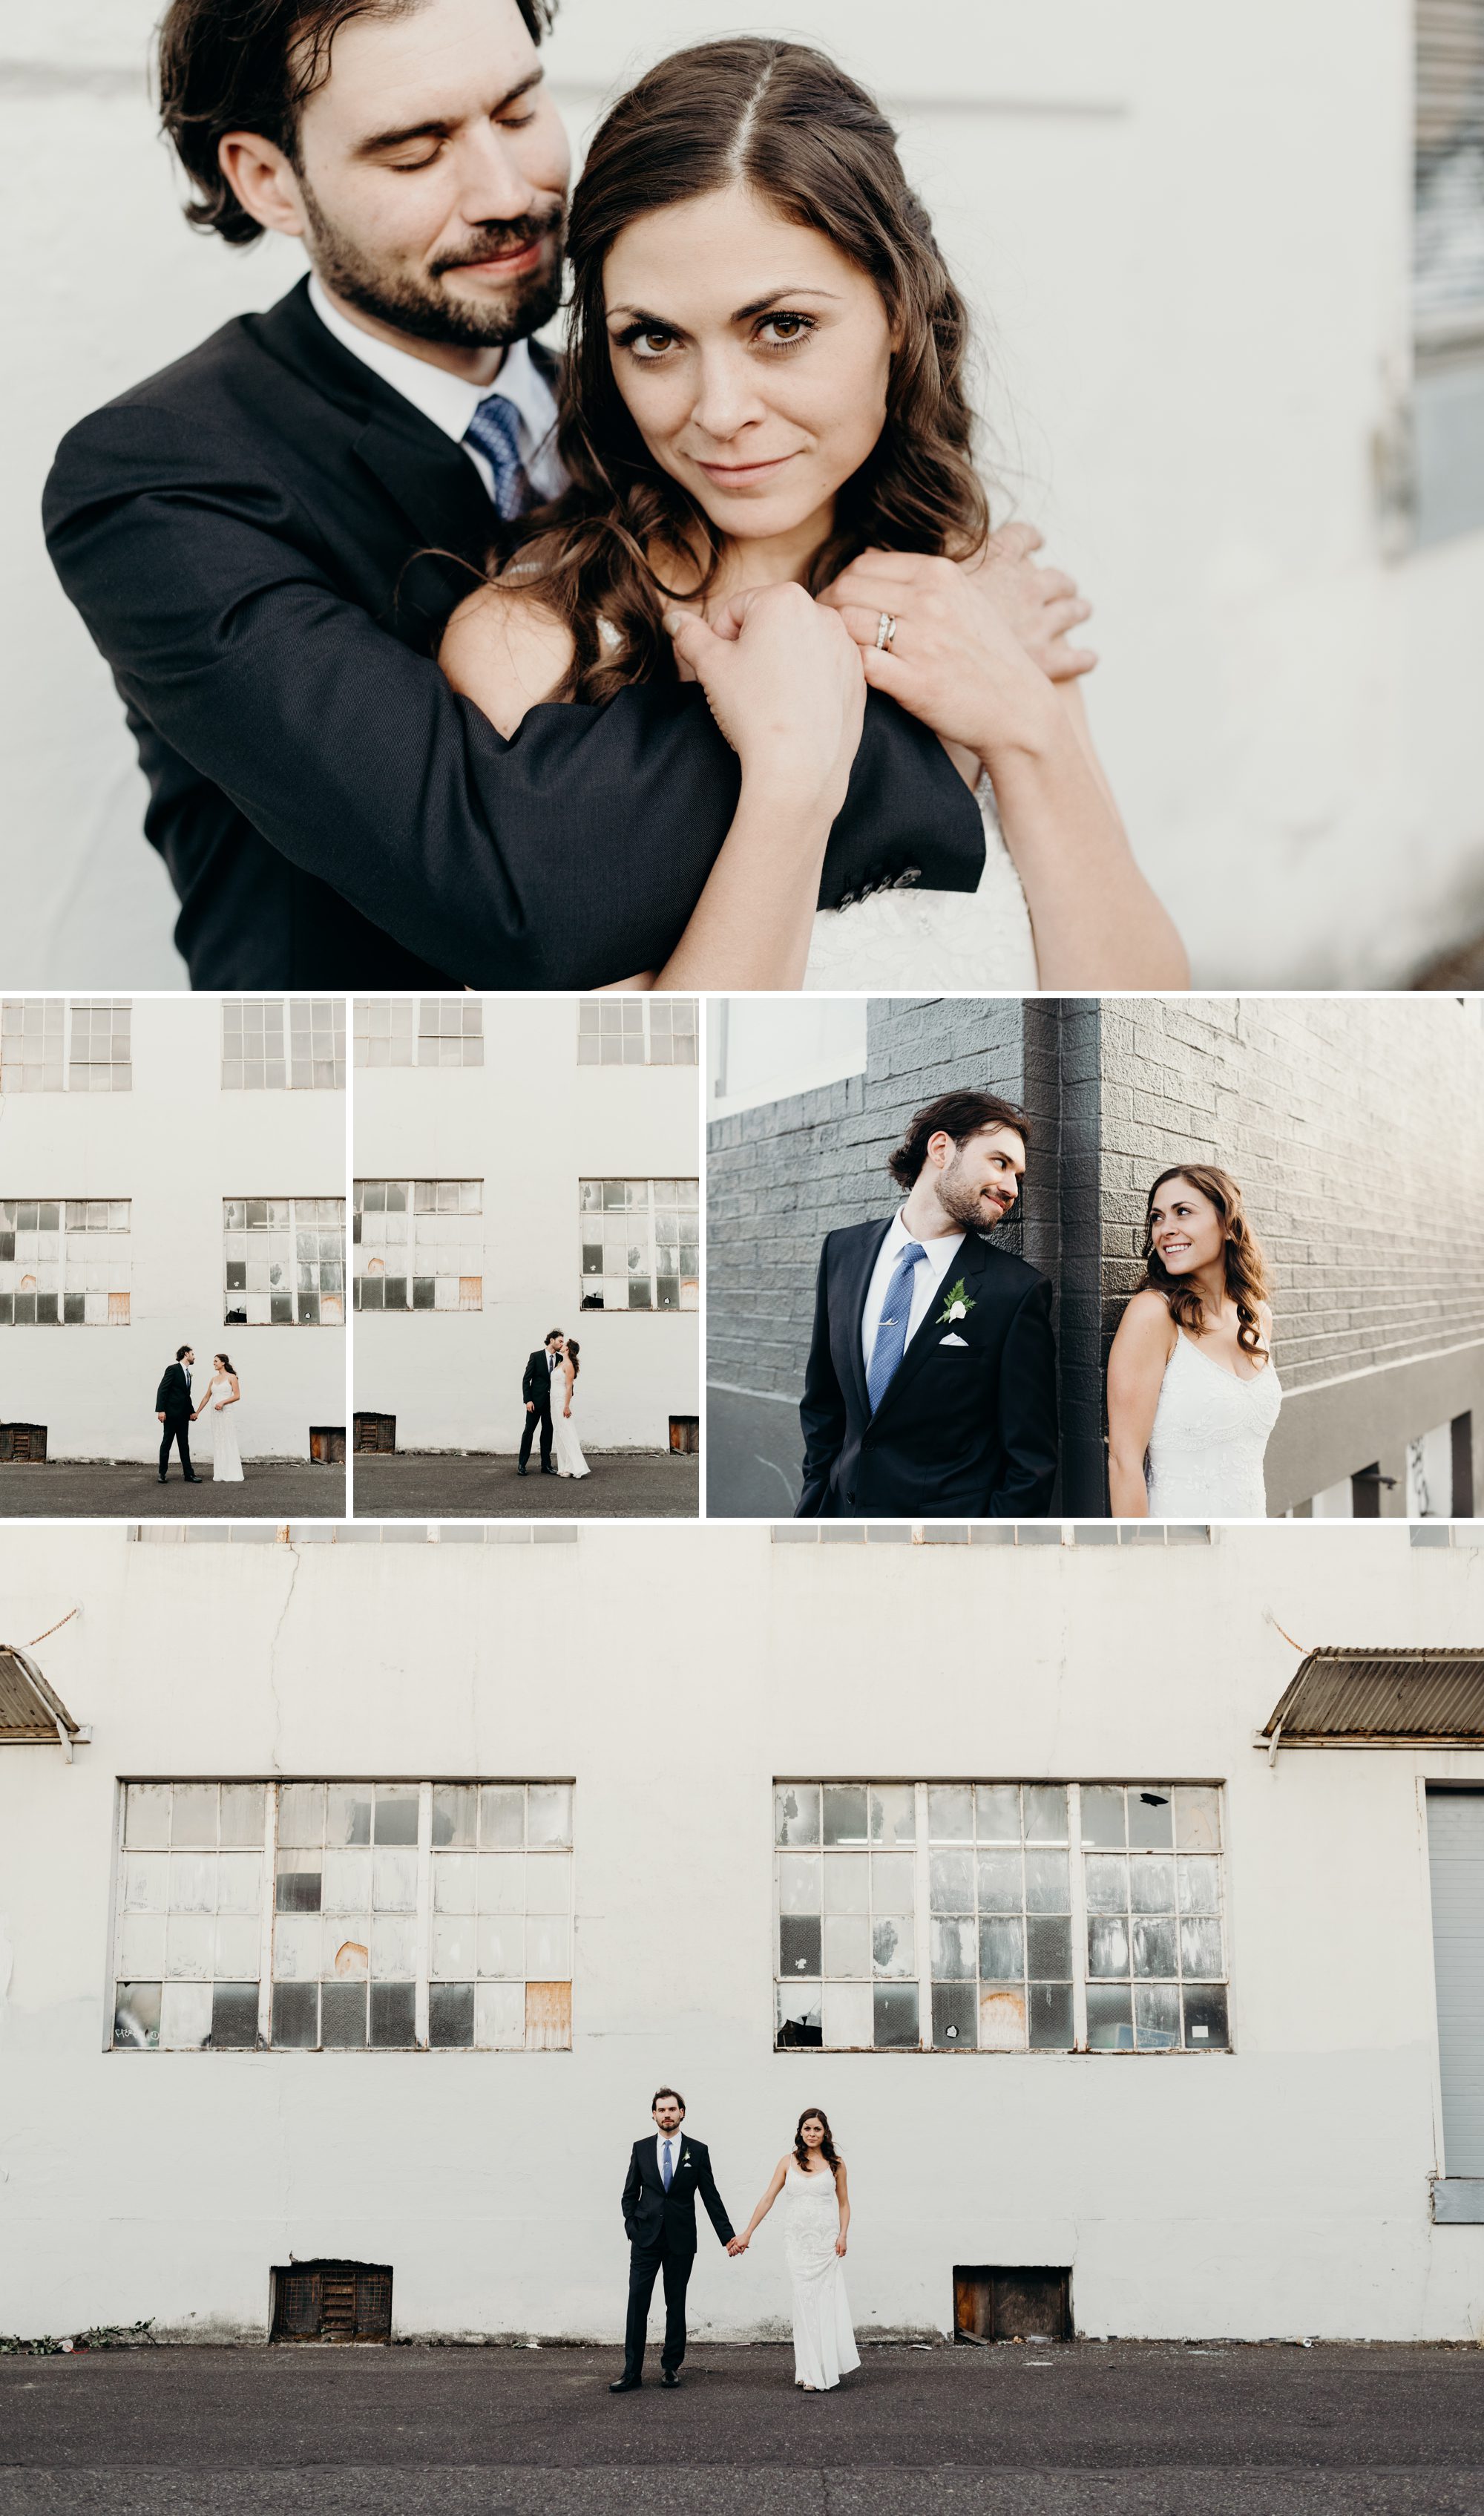 Pretty urban bridal portraits in Portland, Oregon. By Plaza del Toro wedding photographer Briana Morrison.